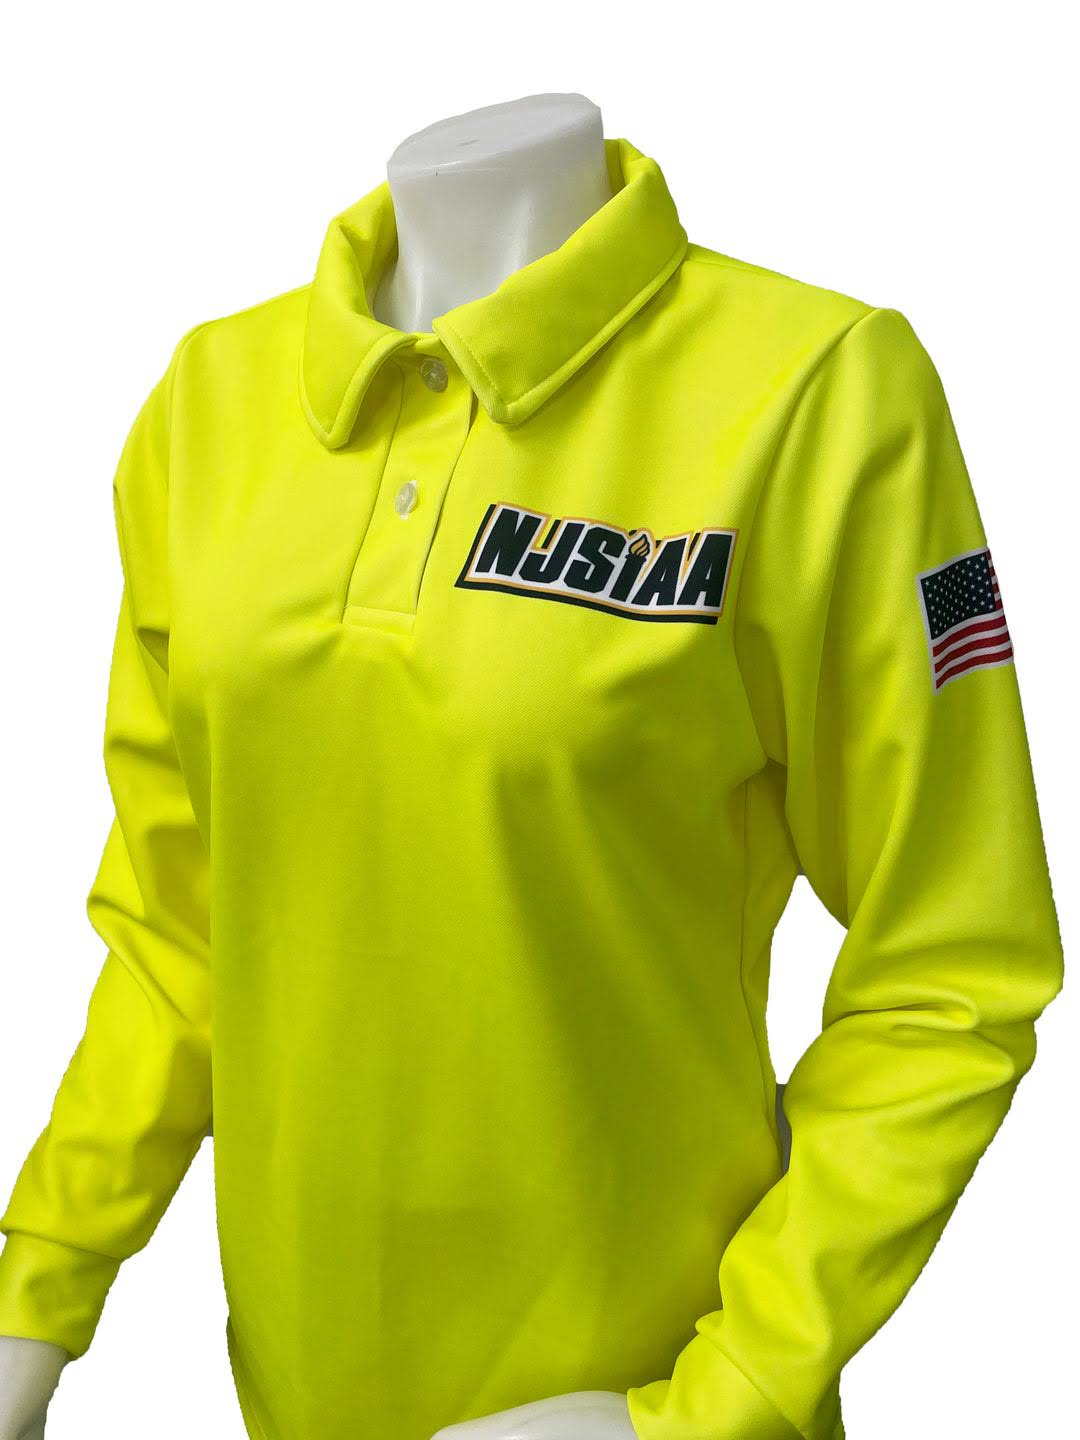 USA603NJ-FY - Smitty NJSIAA Women's Field Hockey Long Sleeve Shirt